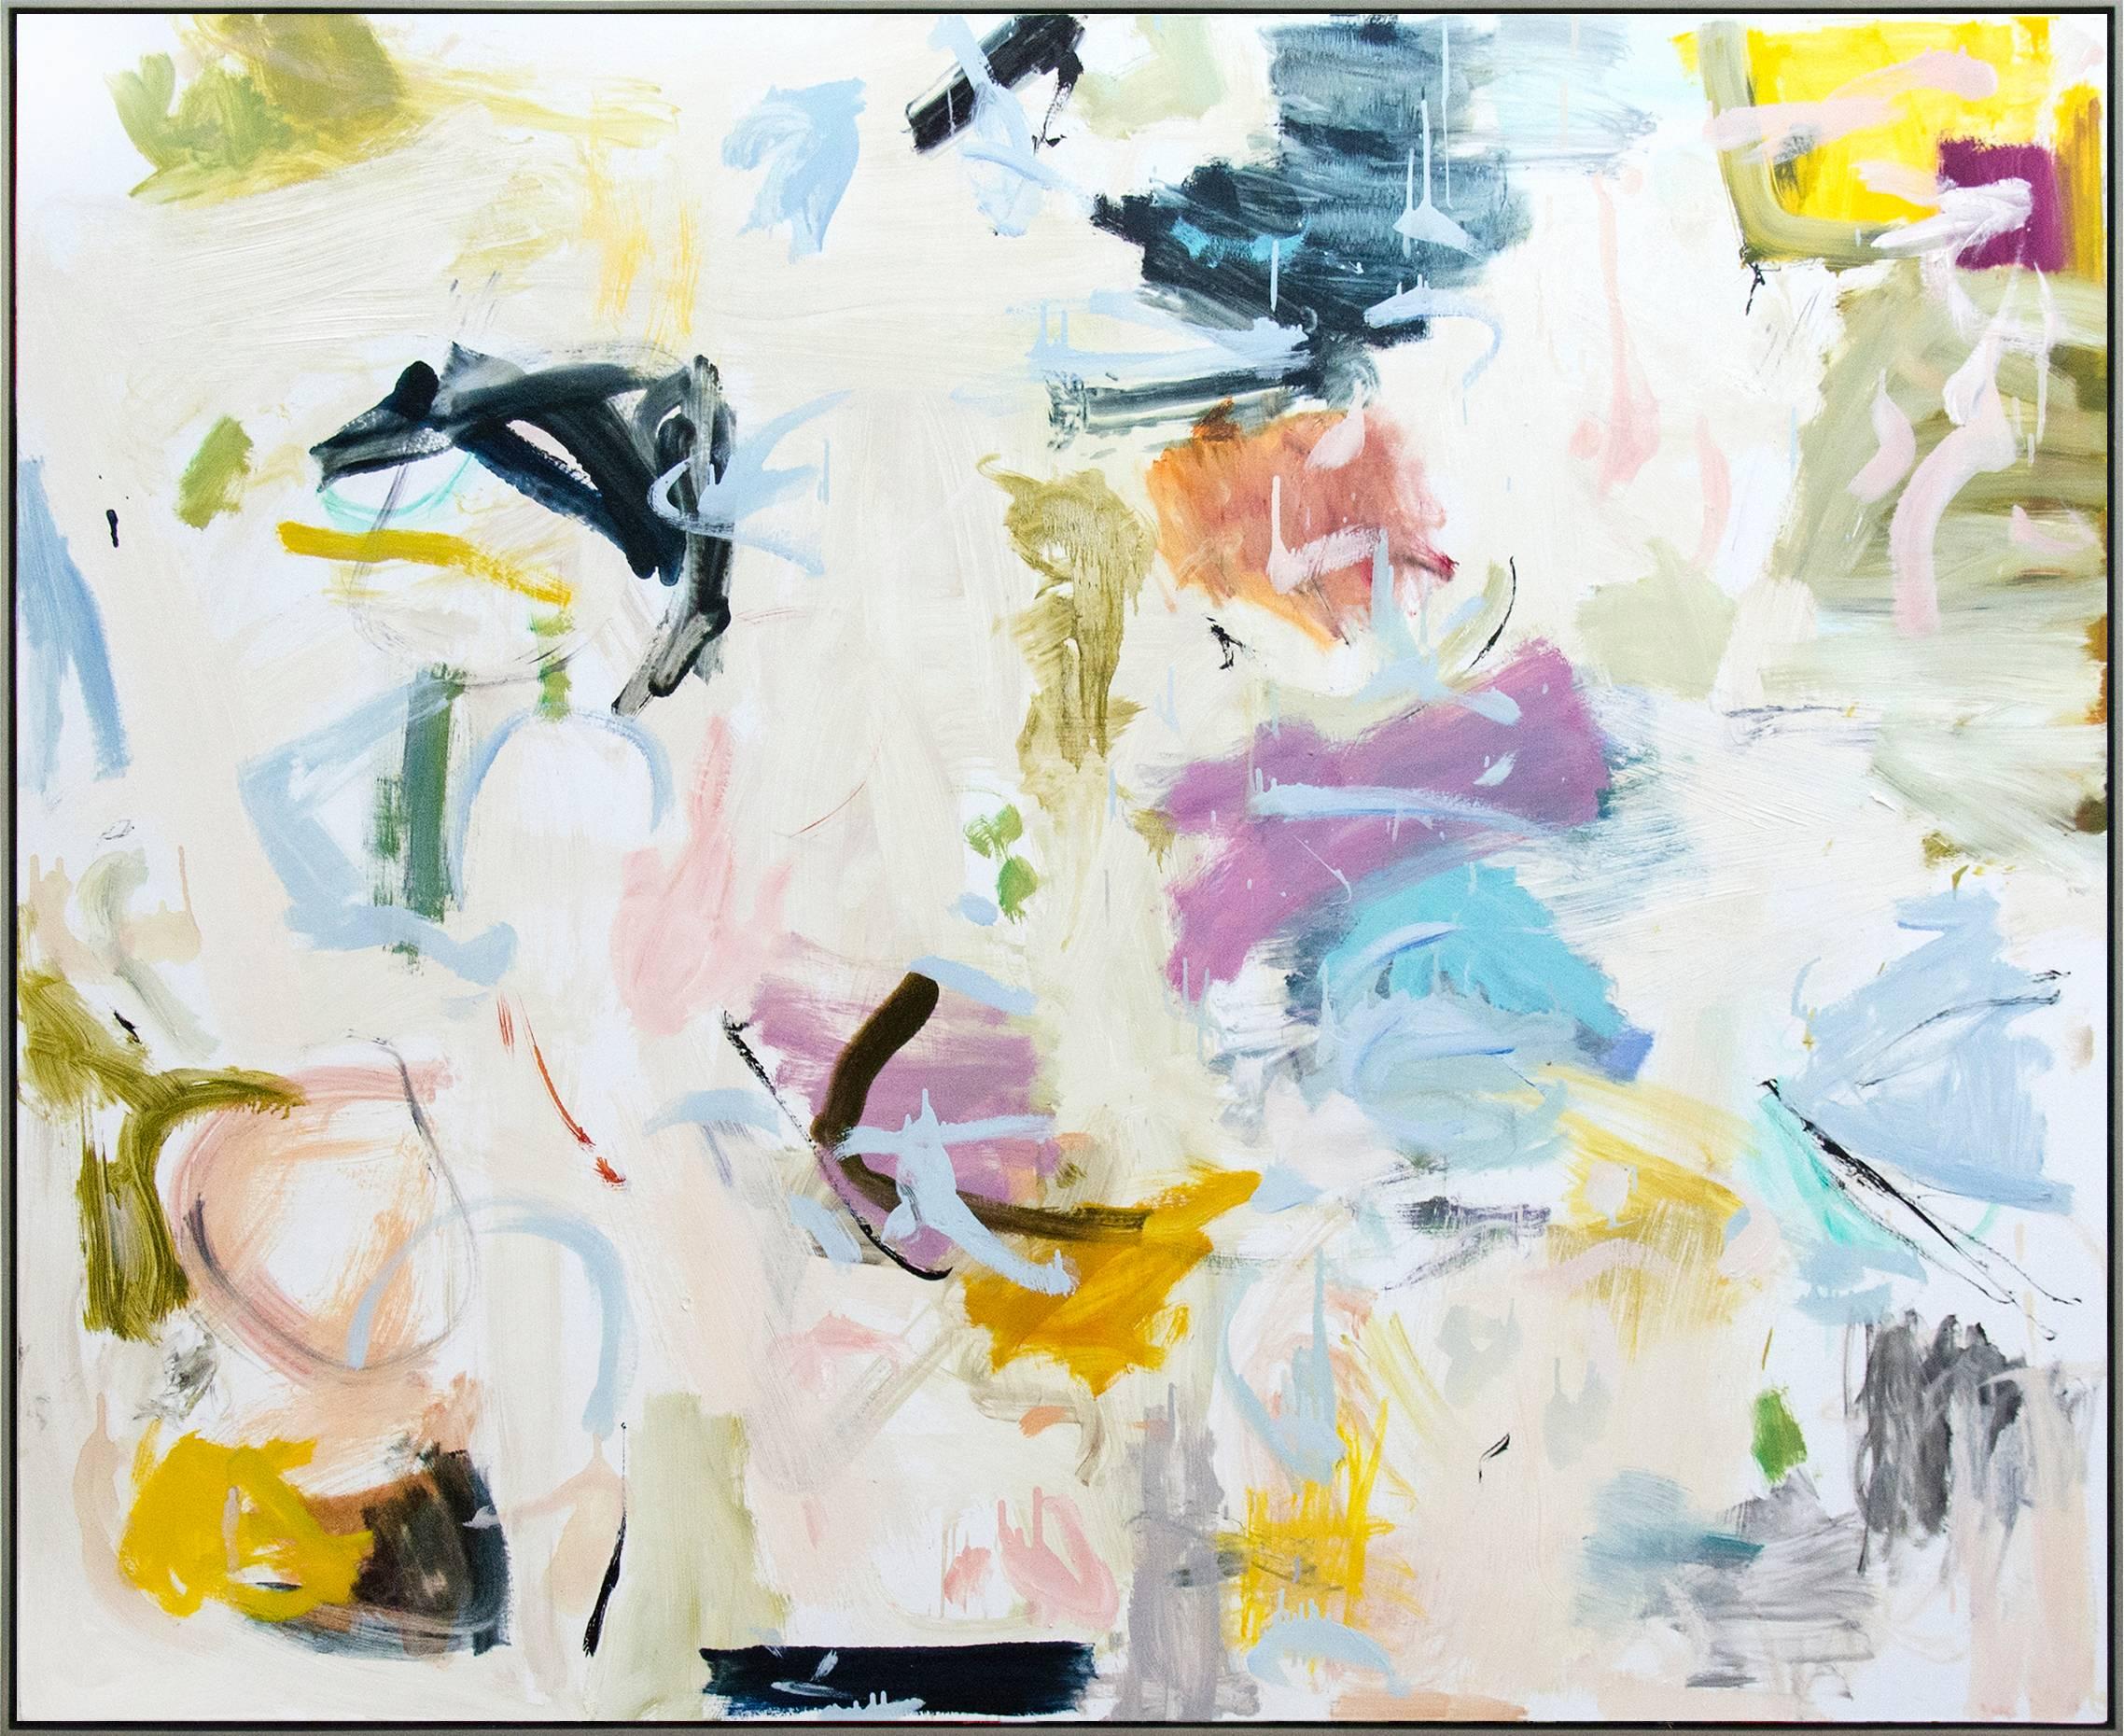 Scott Pattinson Abstract Painting - Kairoi No 5